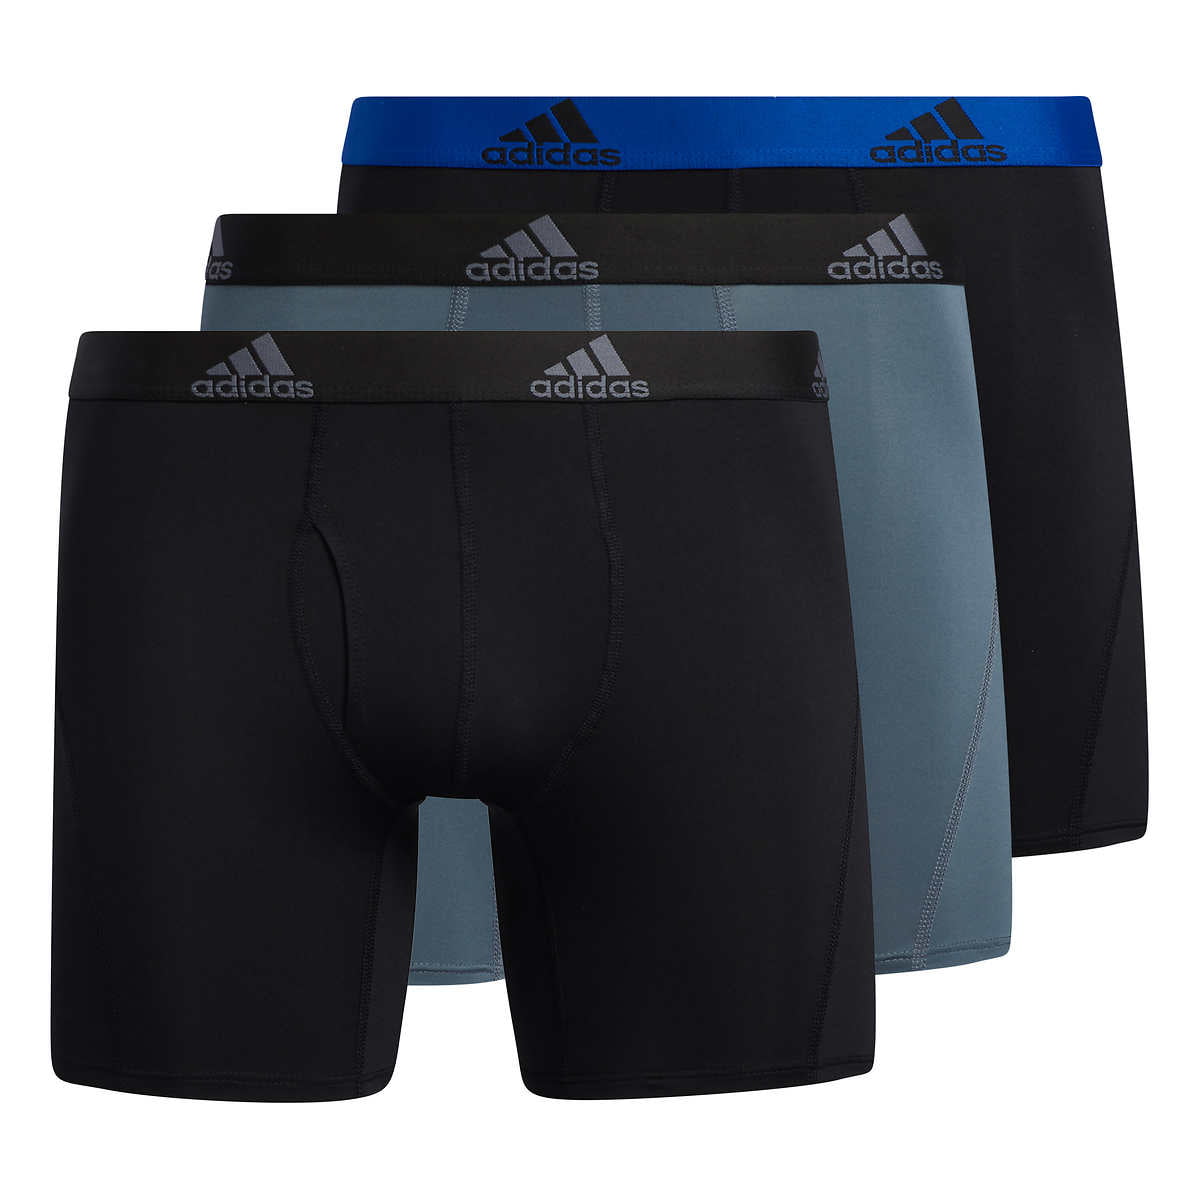 Adidas Men's 3-Pack Performance Boxer Brief (Black/Blue/Gray, M